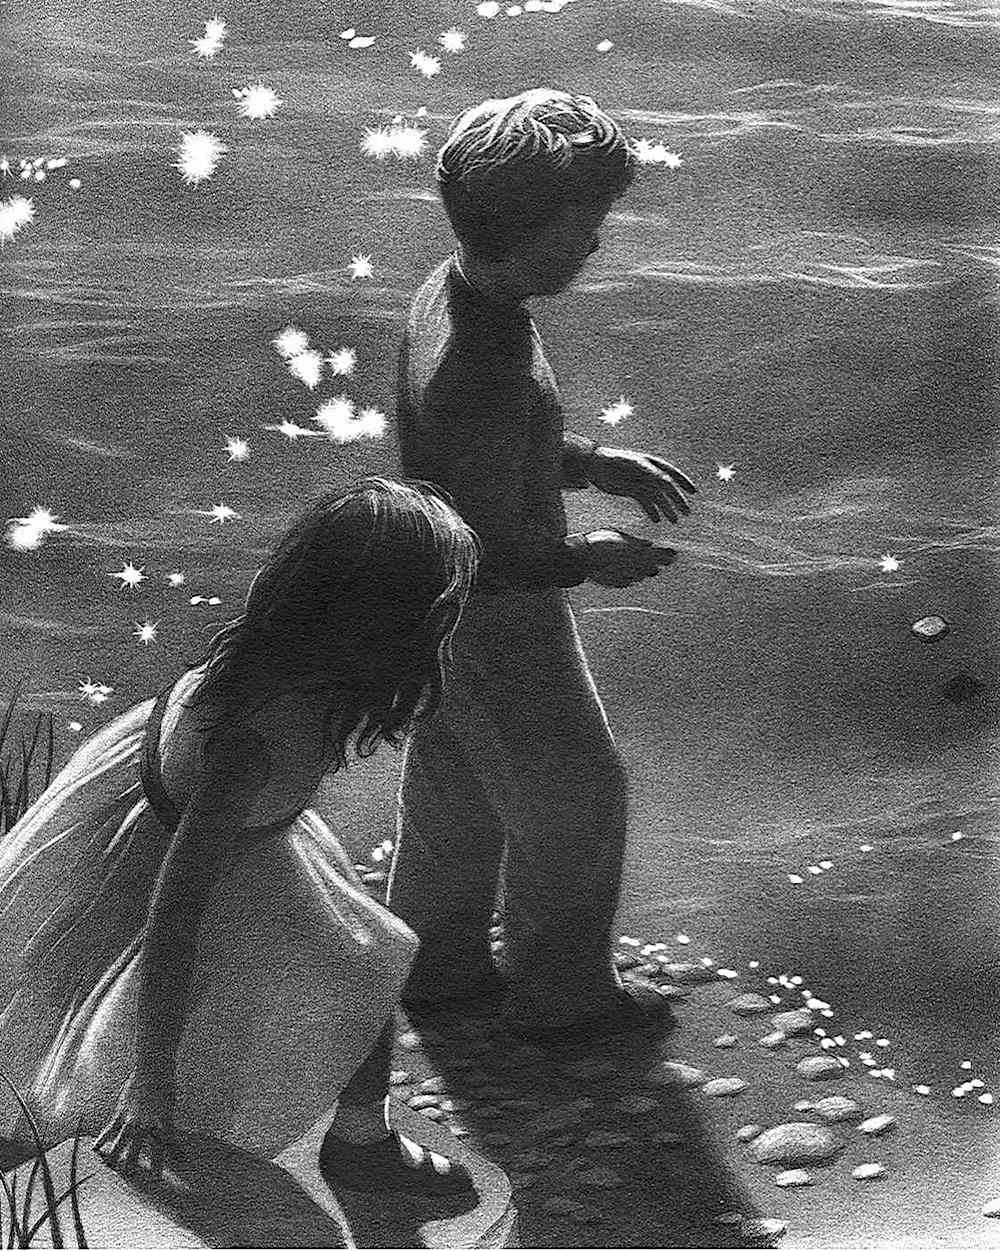 a Chris Van Allsburg book illustration of children at the beach skipping a stone